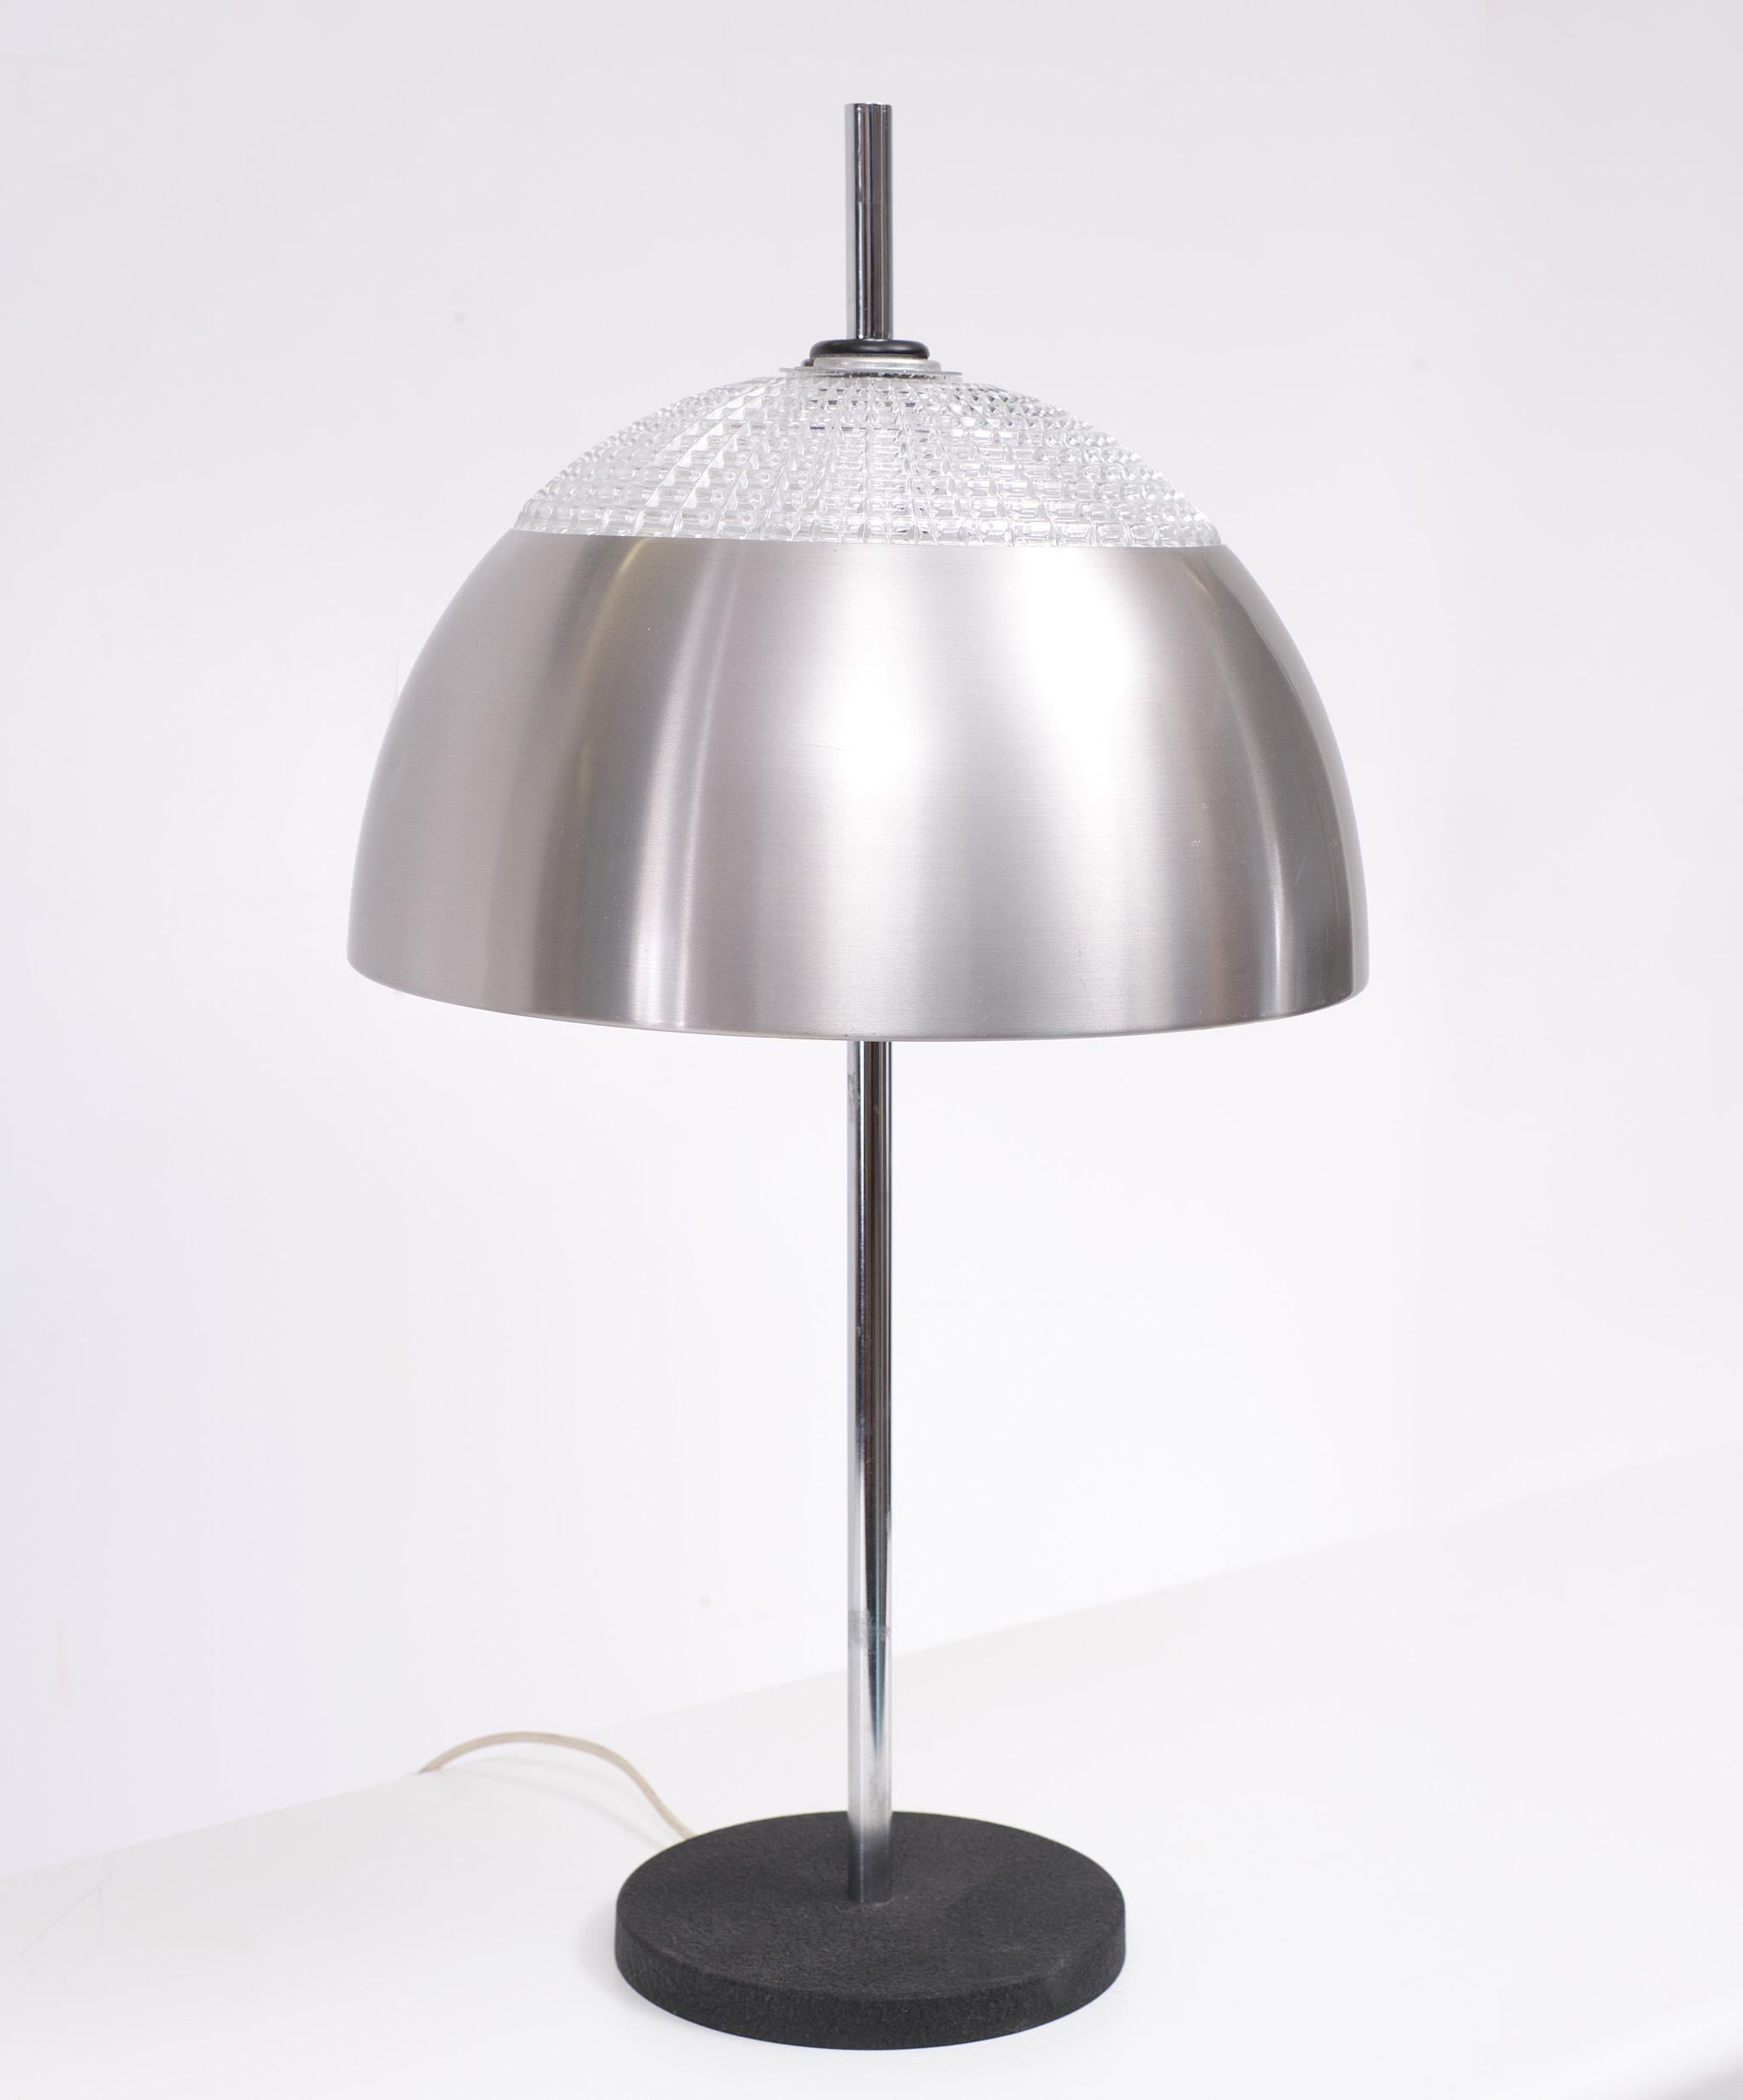 Rare RAAK Sixties Table Lamp D-2088 Inspiration, Holland For Sale 2